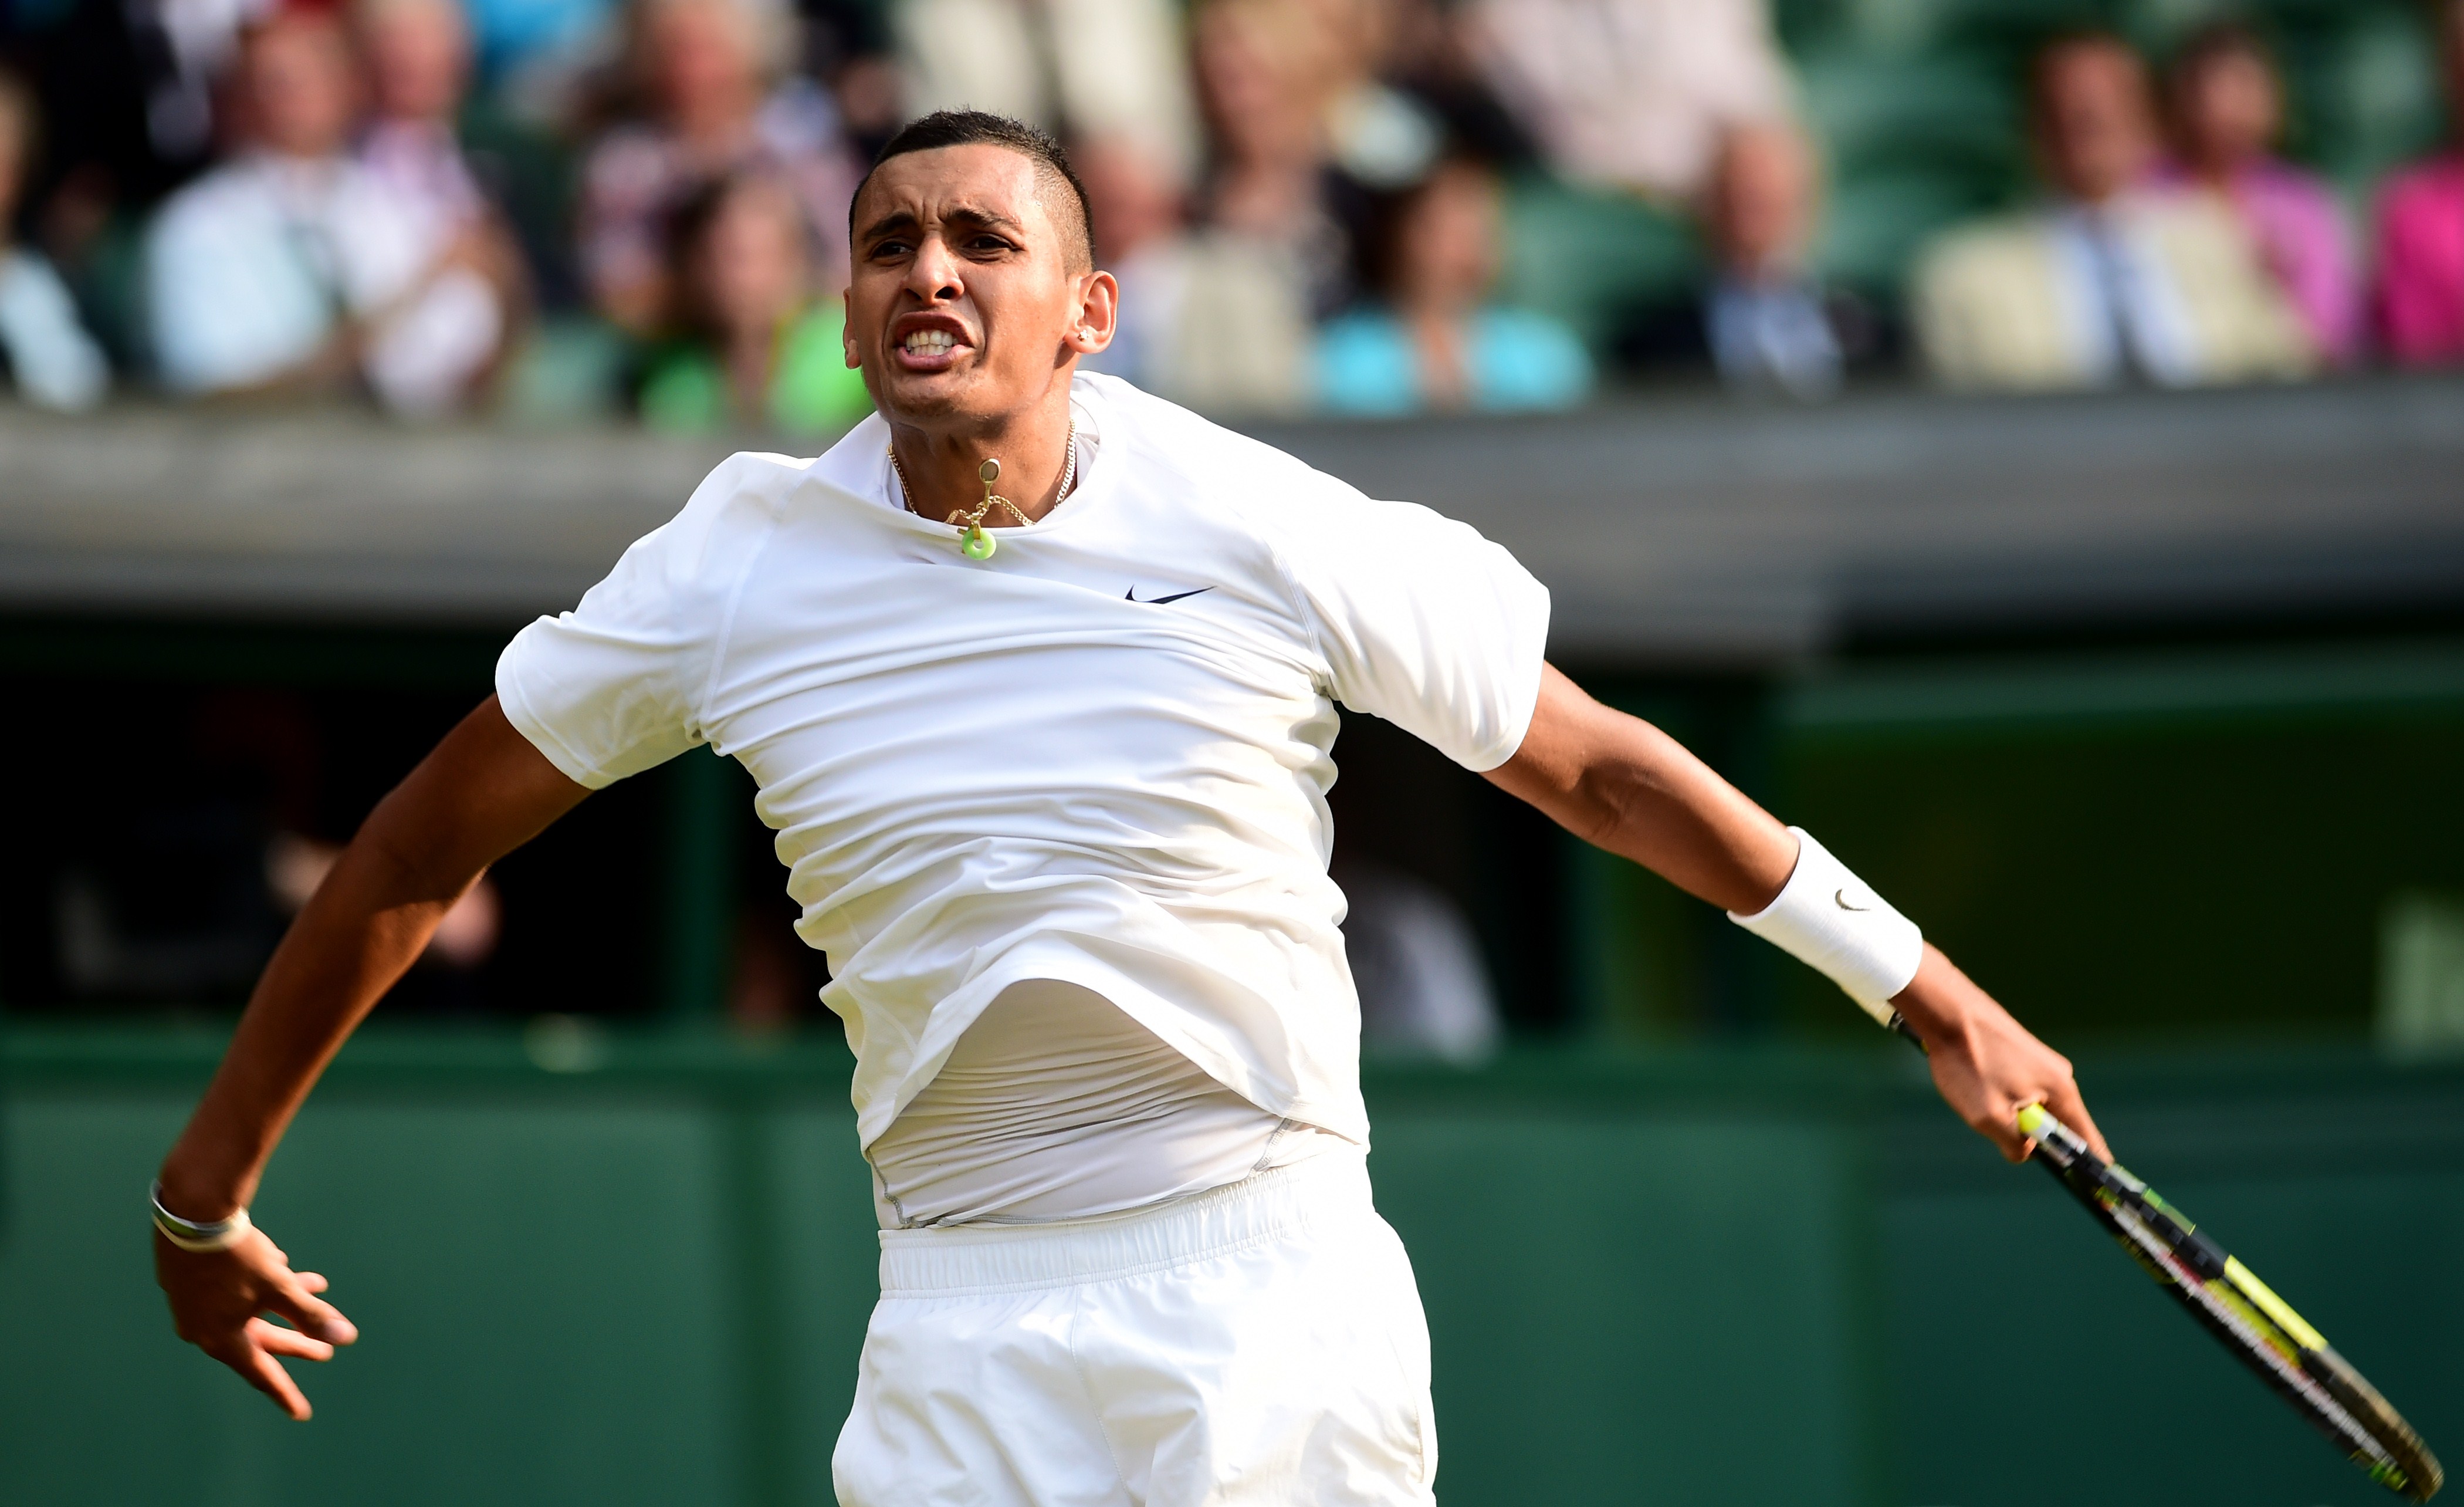 Nadal stunned by 19-year-old Kyrgios at Wimbledon